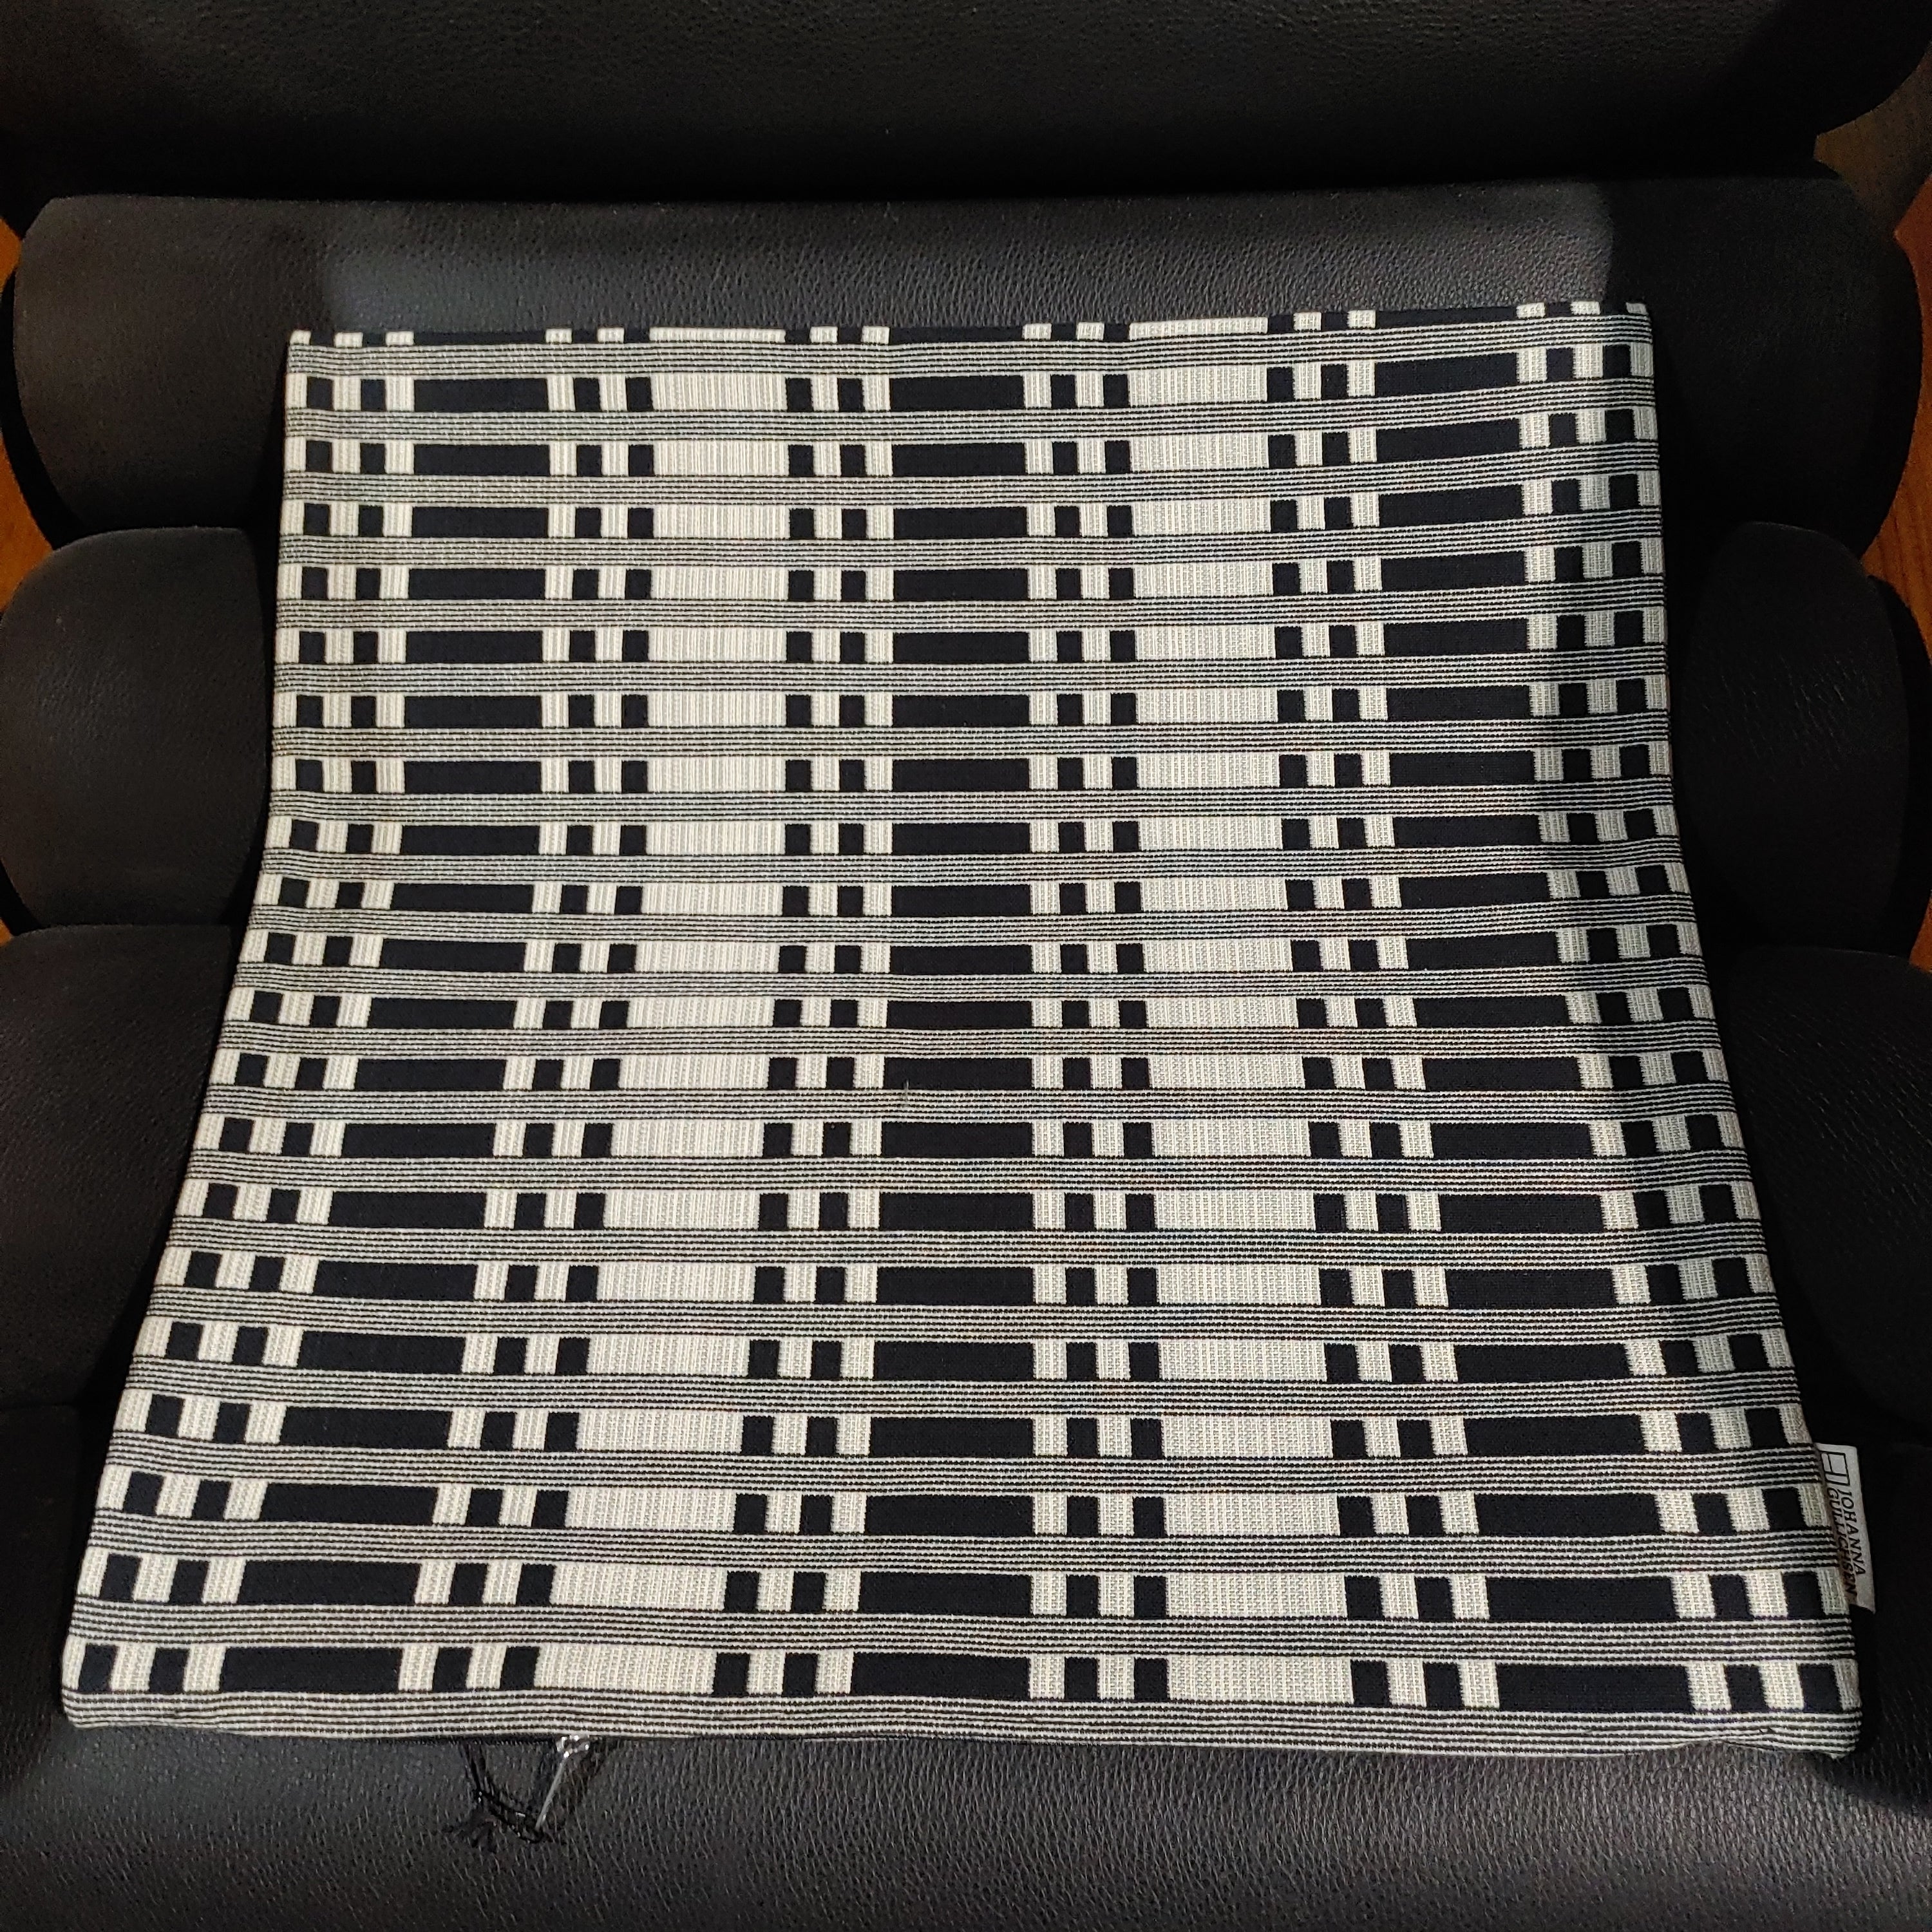 Cushion pillow 50x50 cm (cover only) -Tithonus, Black